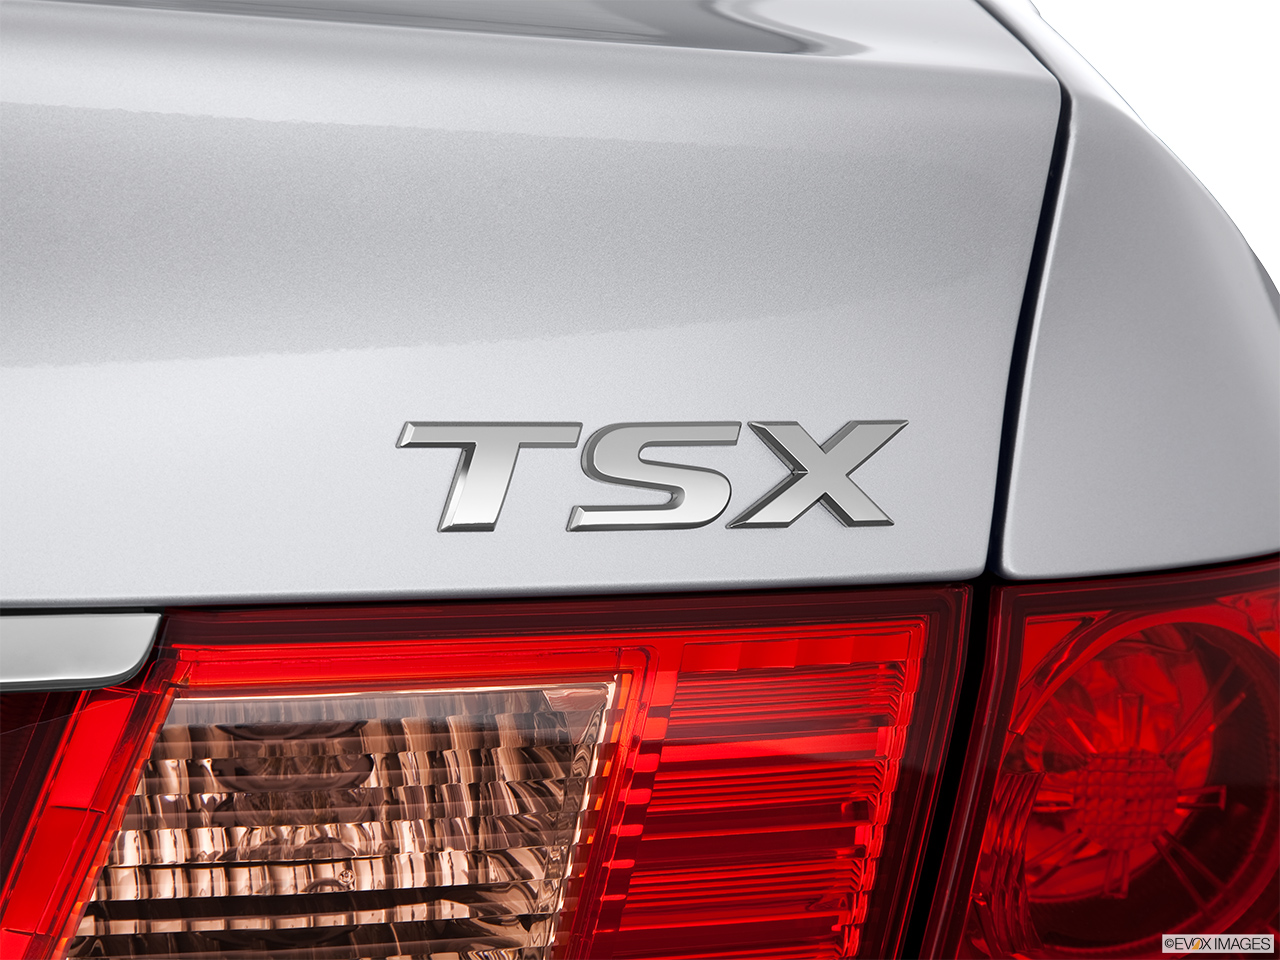 2013 Acura TSX 5-speed Automatic Rear model badge/emblem 